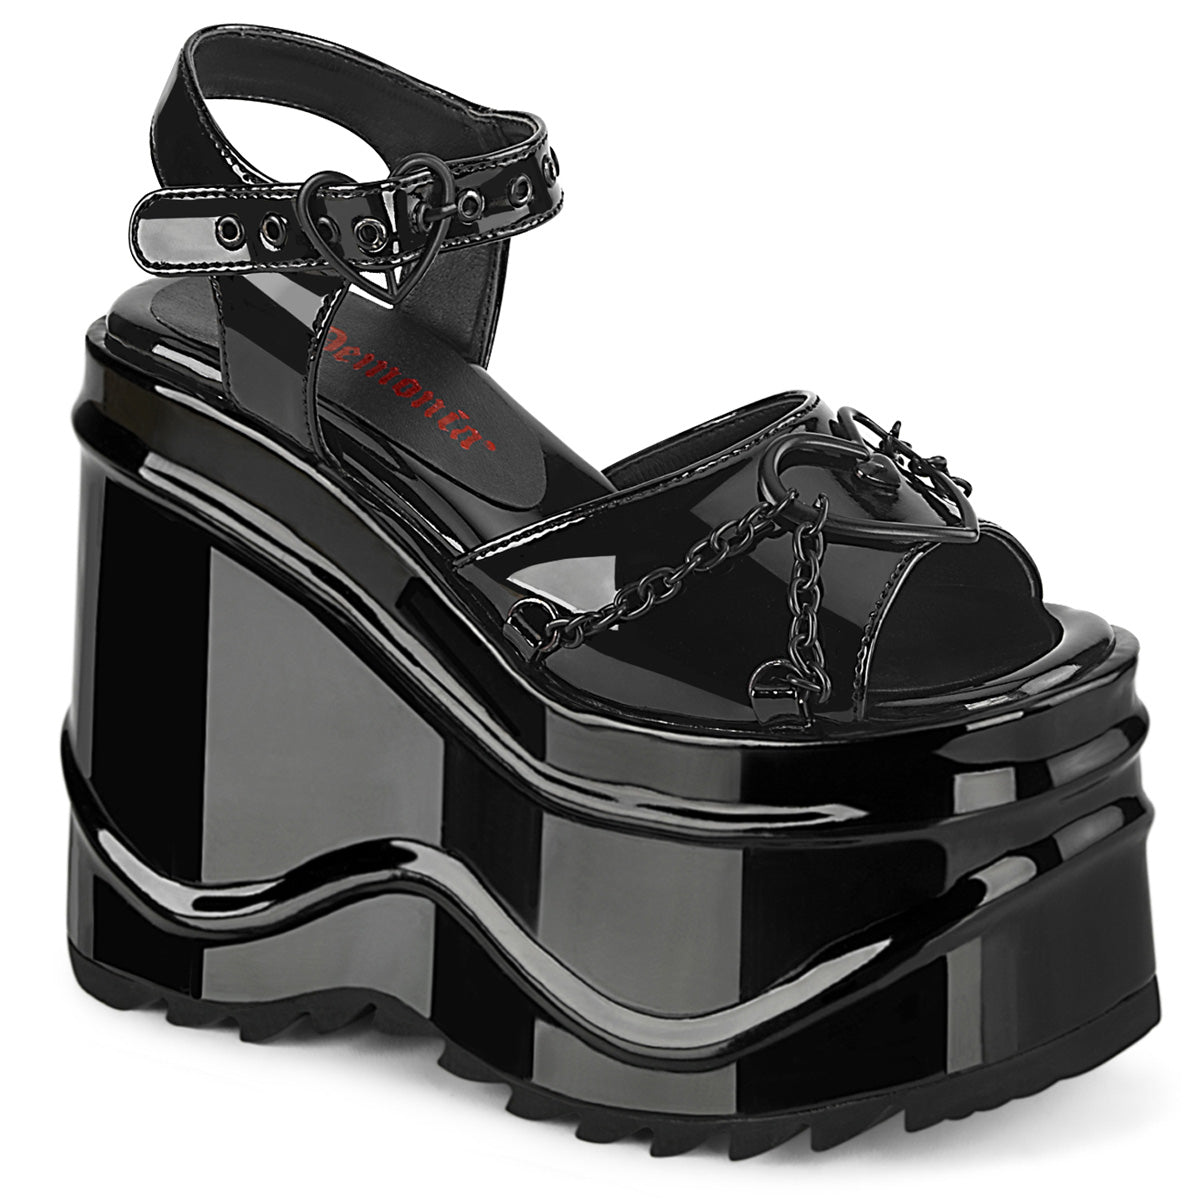 WAVE-09 Black Patent Sandal Demonia